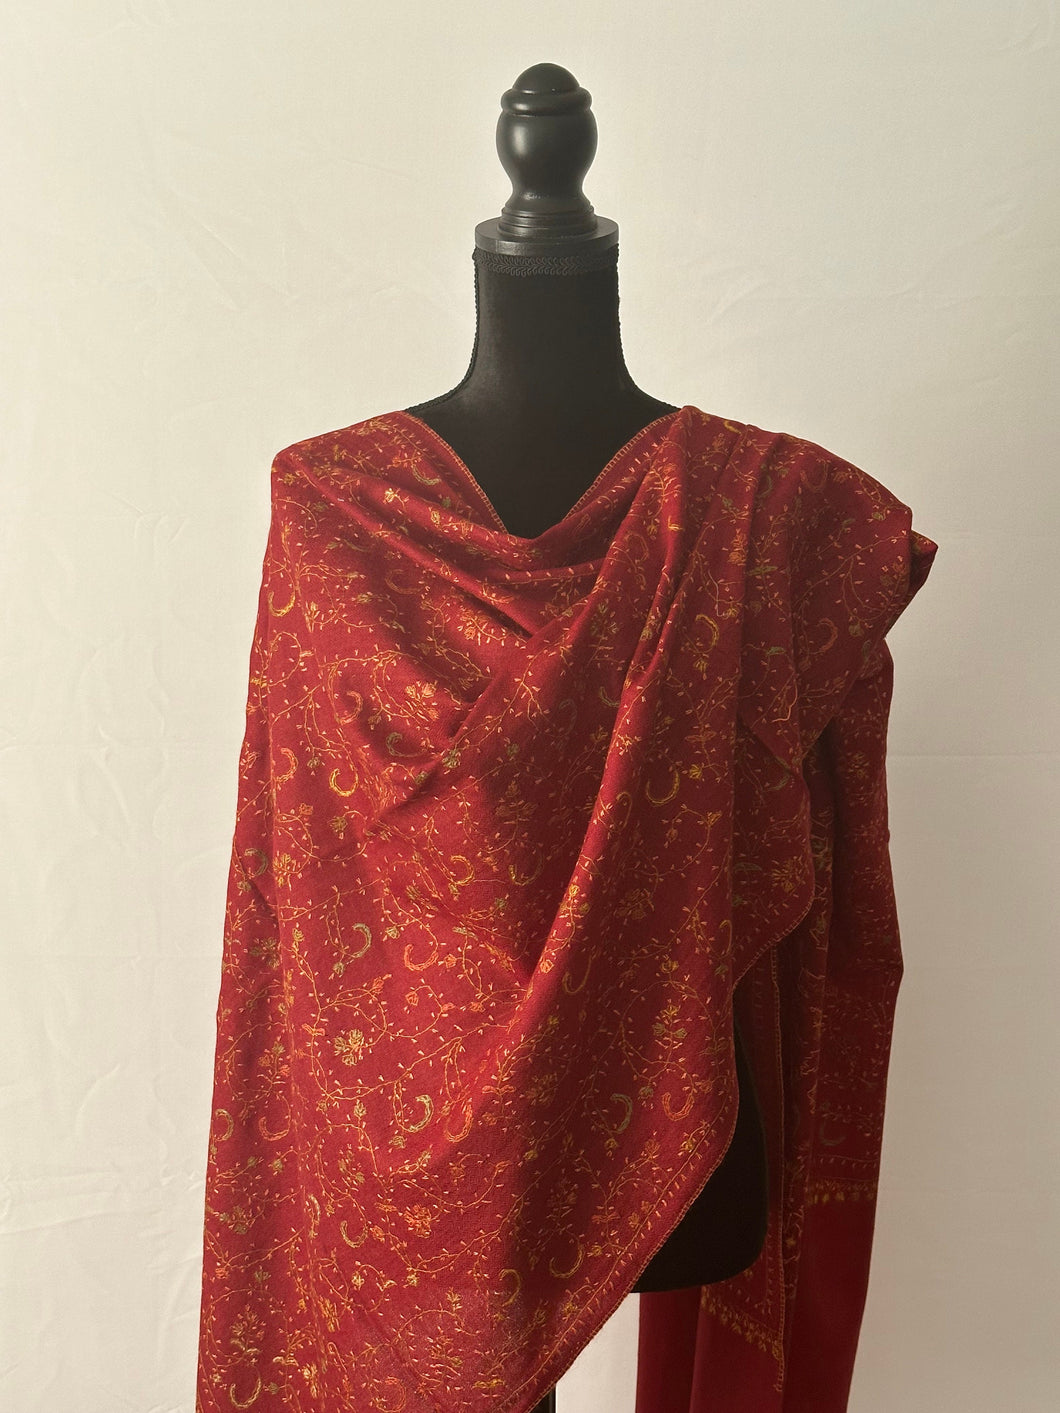 Sozni Embroidered Jali Pashmina  Stole (100% Fine Wool)  - embroidered Kashmiri Shawl, all over embroidery